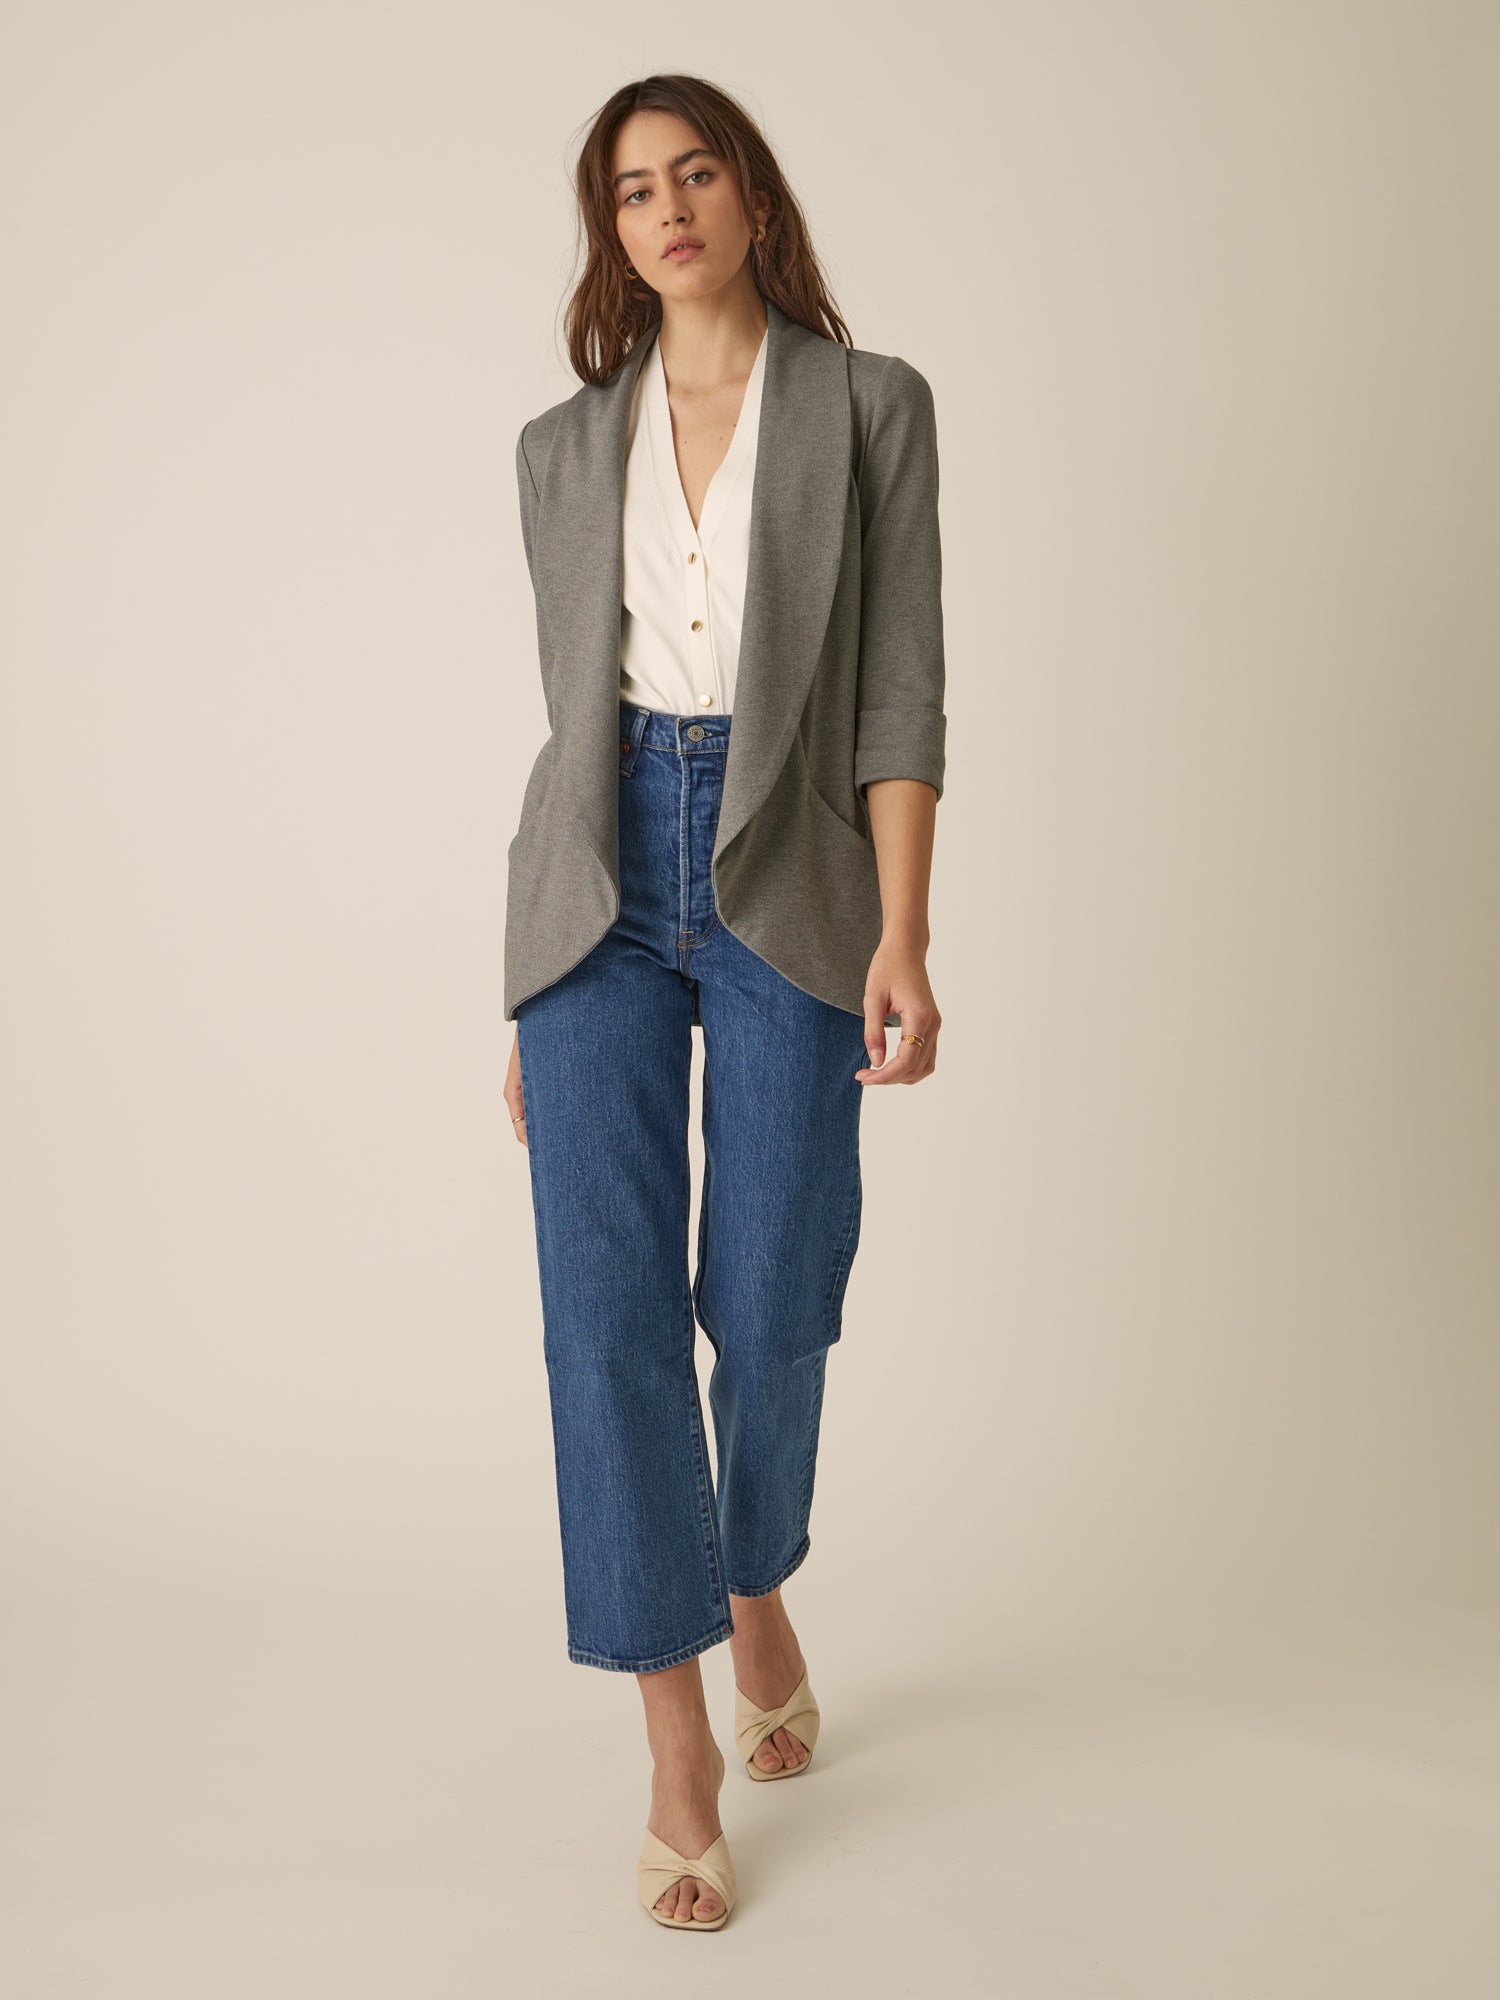 Classic Melanie Shawl Simple Staple Dark Grey Neutral Color Workwear Blazer Jacket Everyday Shawl Front Pockets Best Seller Customer Favorite